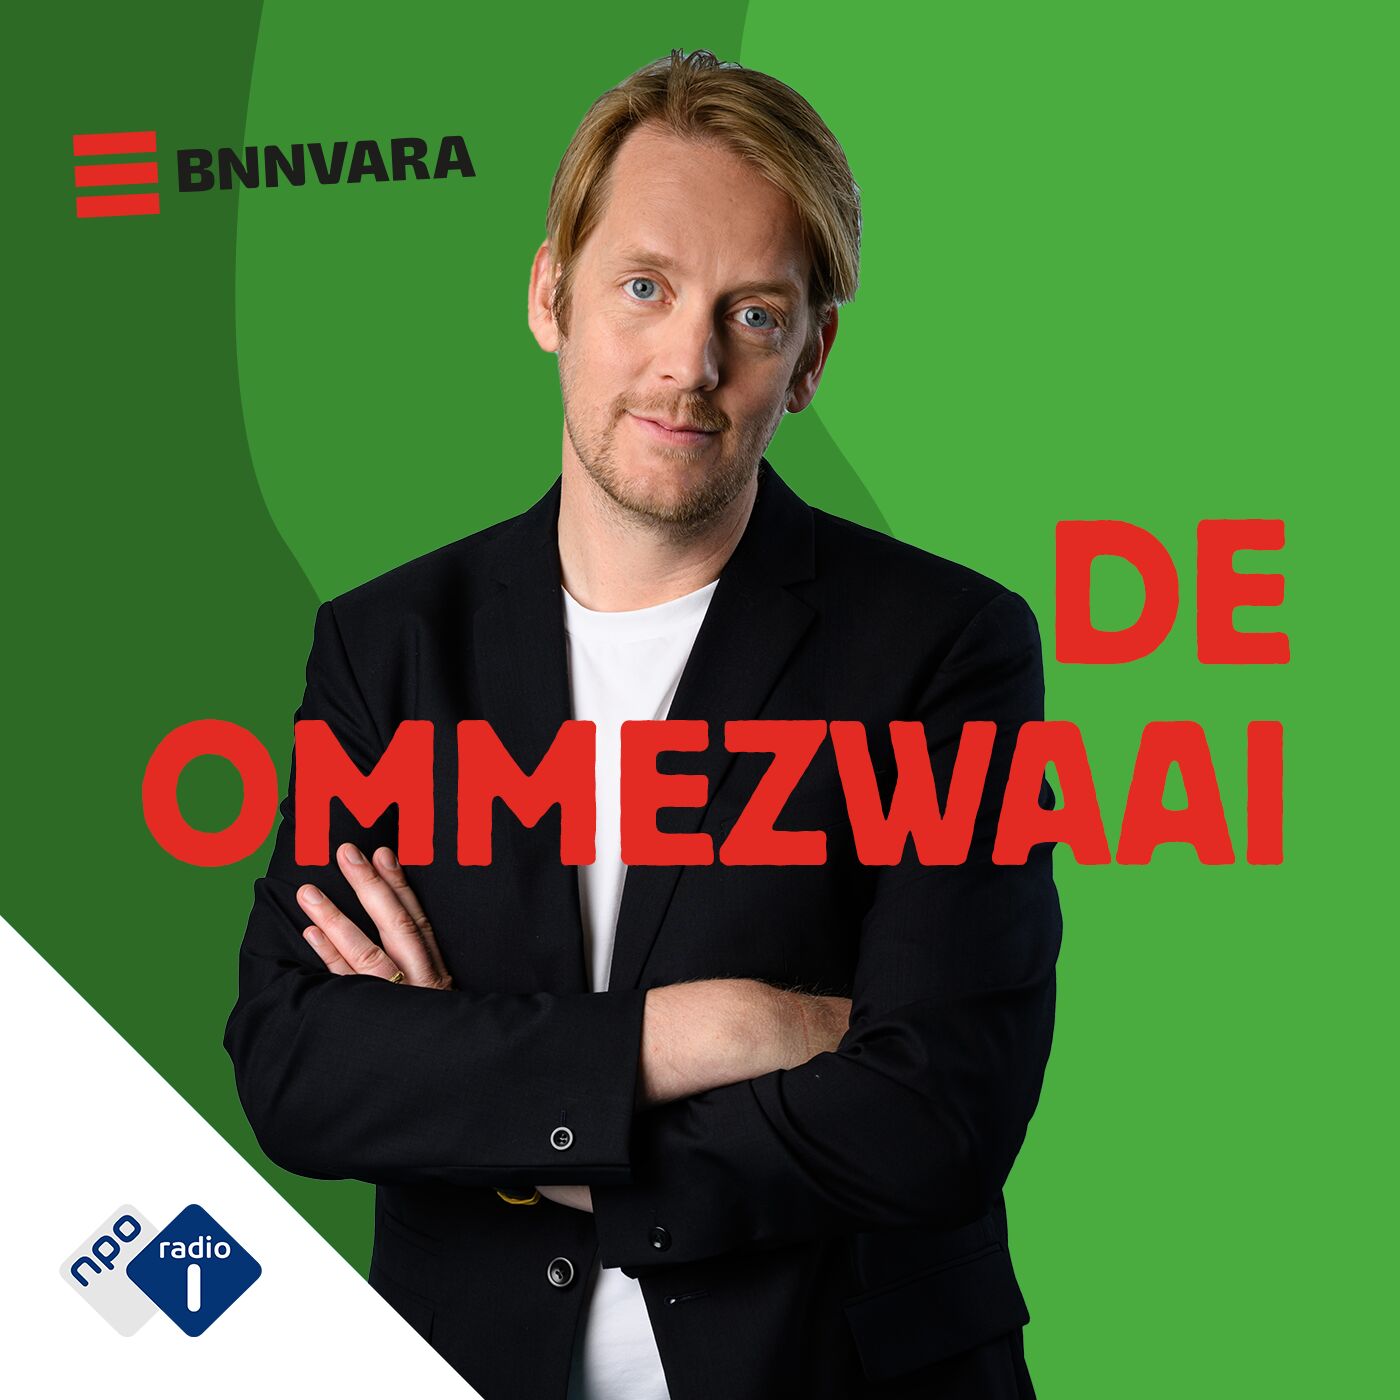 De Ommezwaai podcast show image